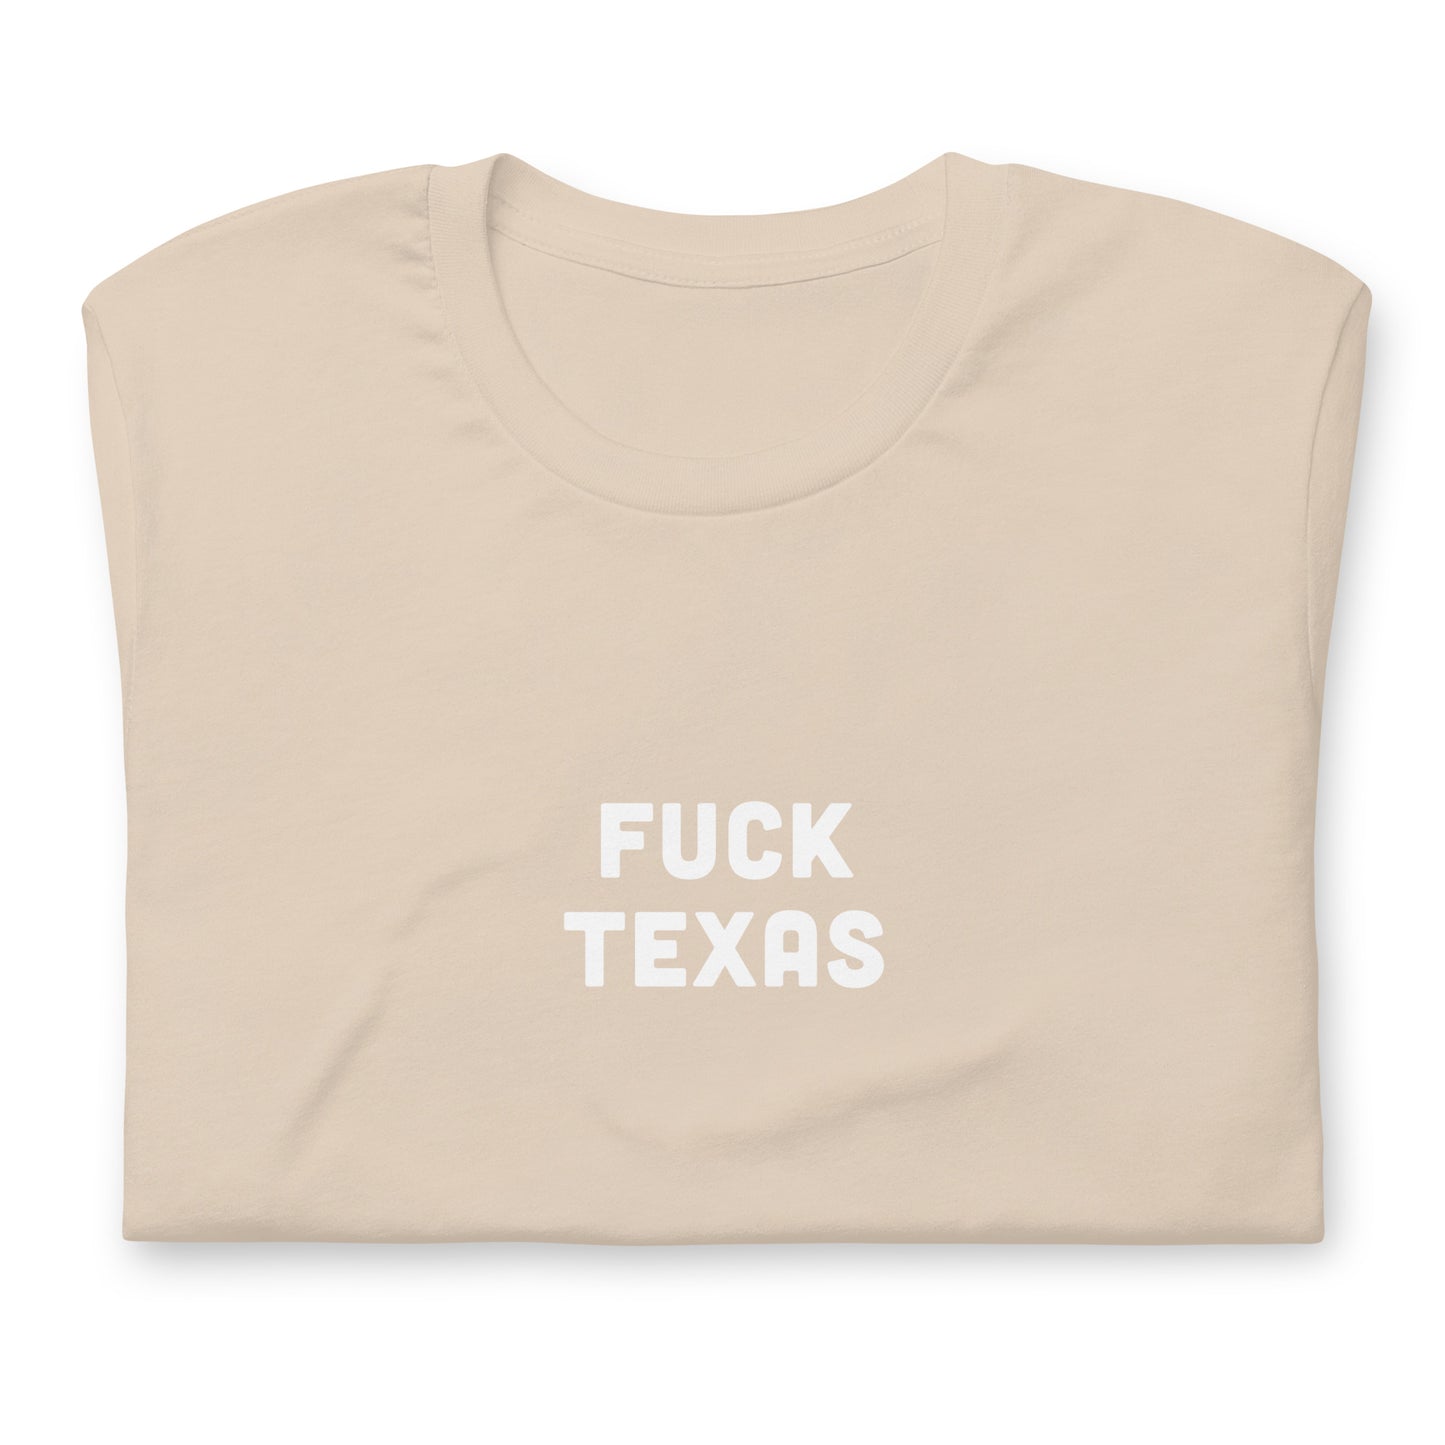 Fuck Texas T-Shirt Size XL Color Asphalt